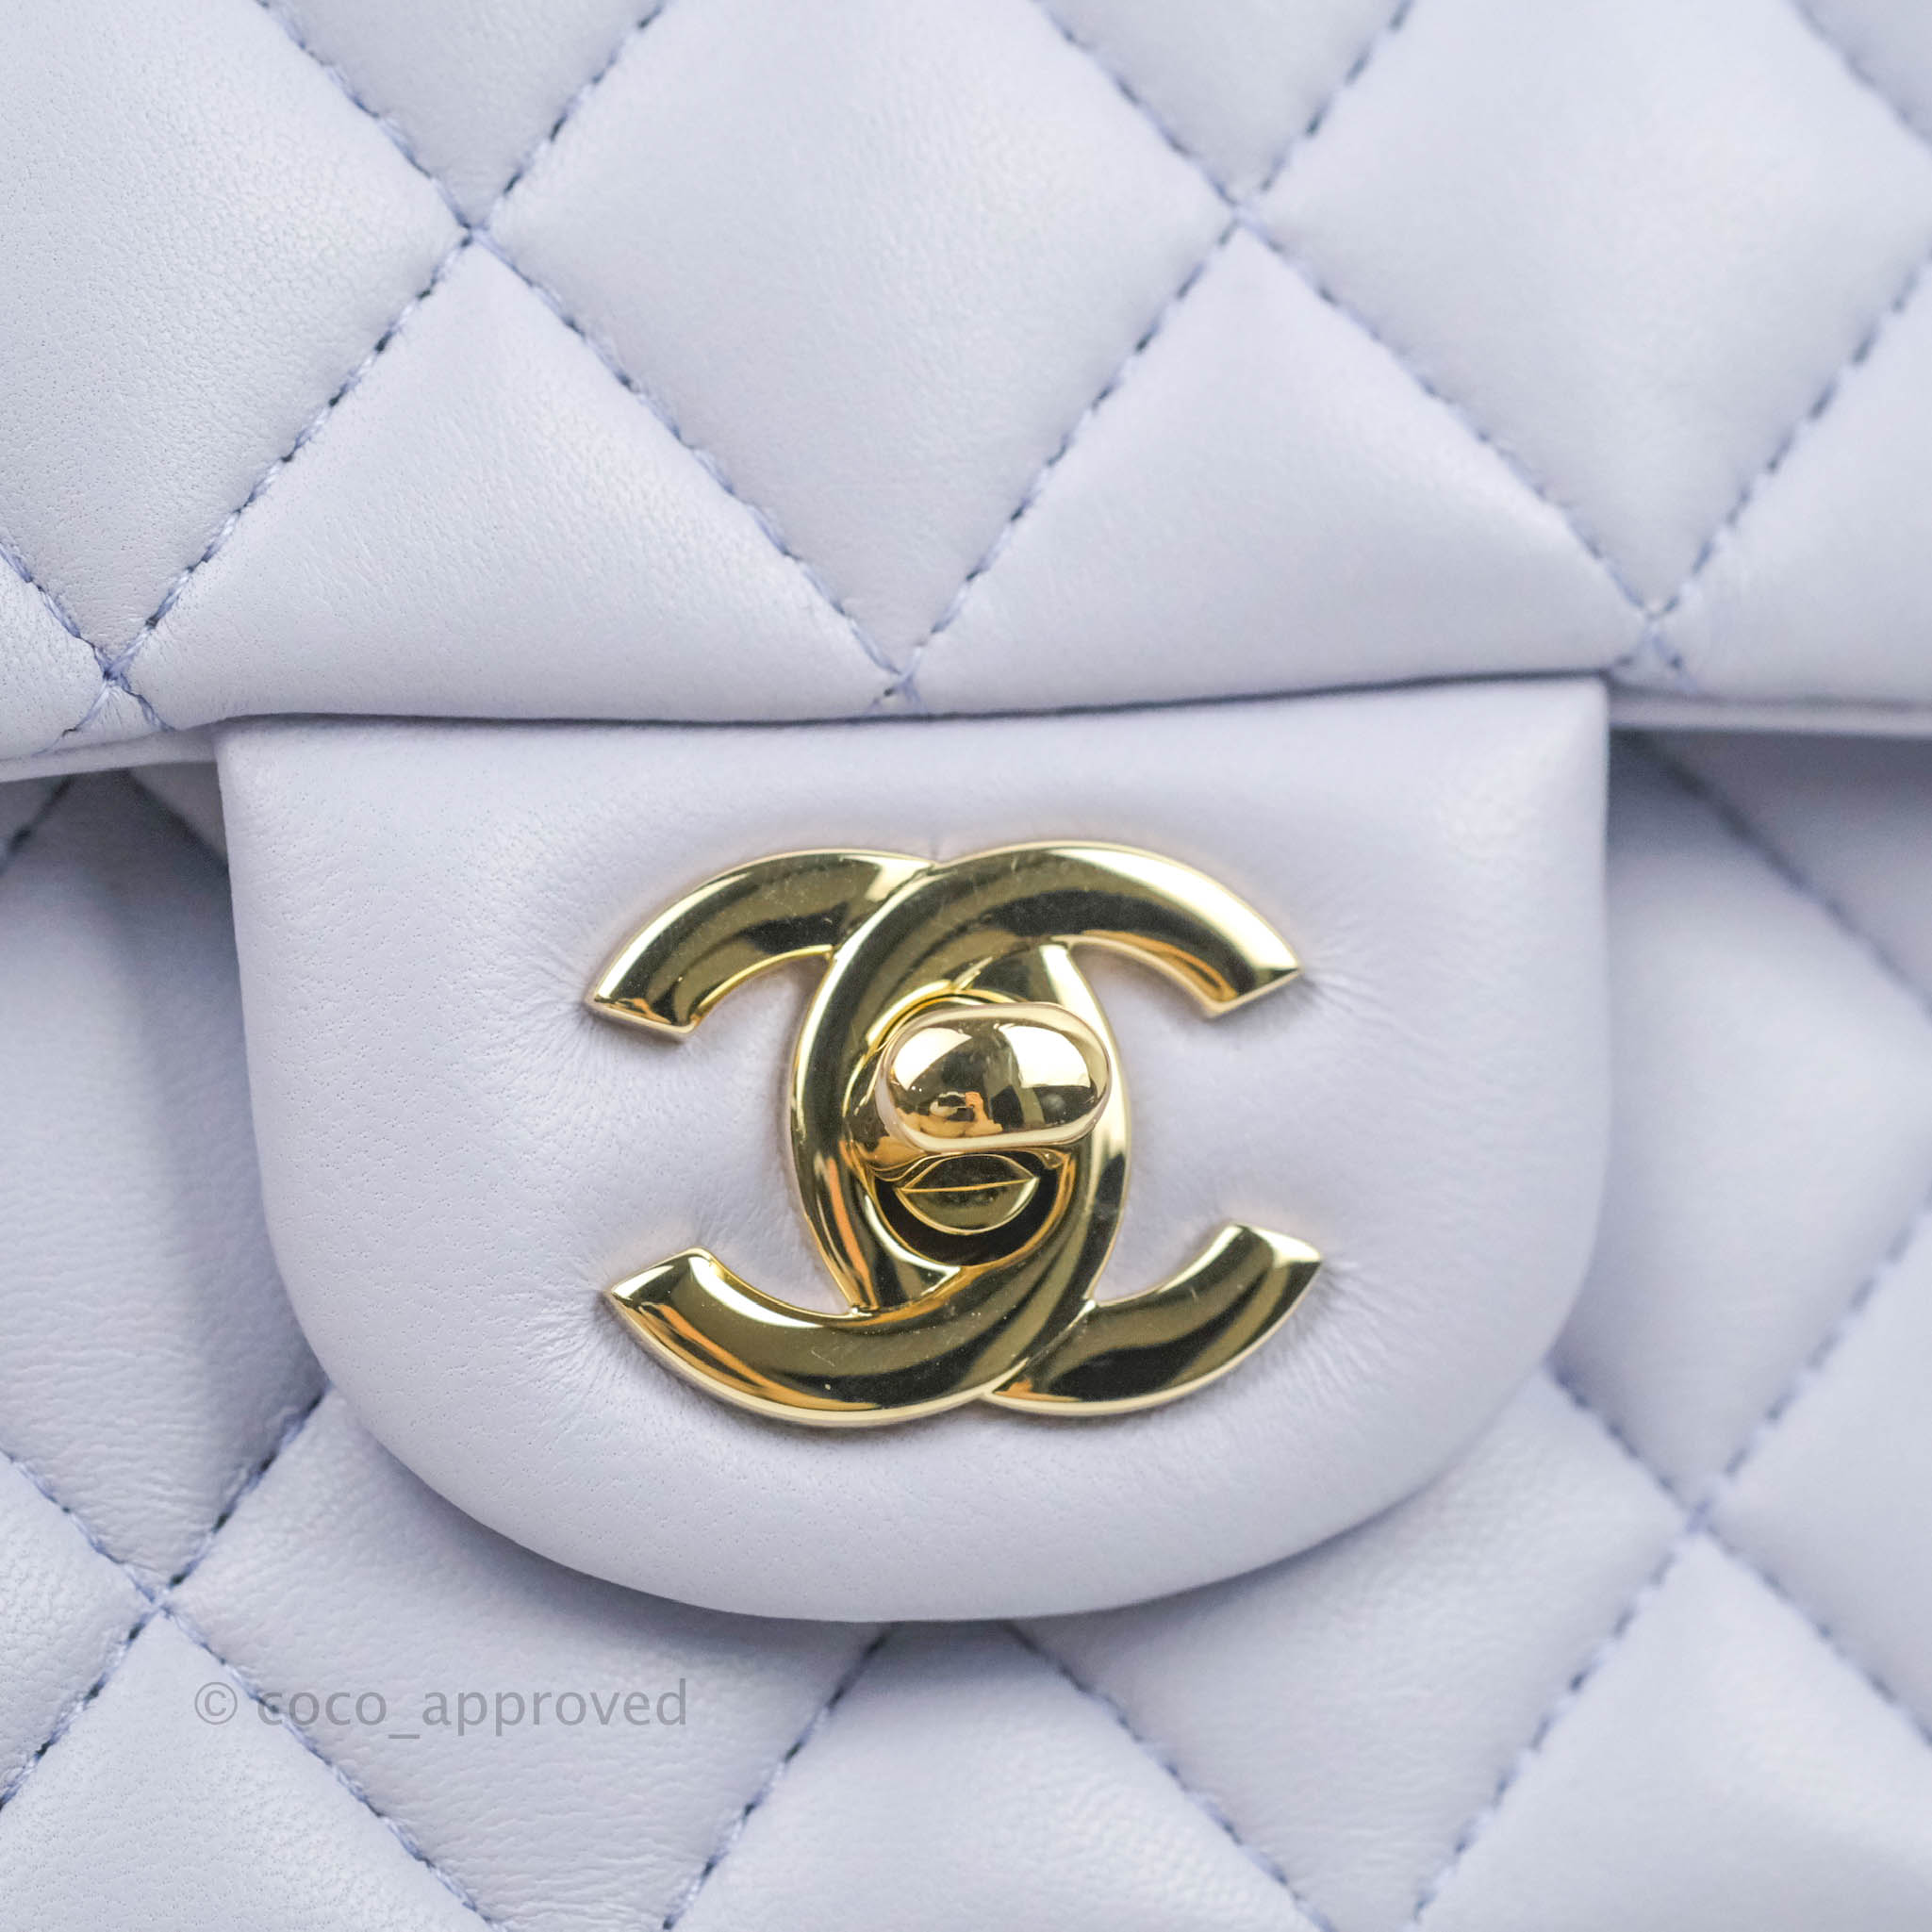 Chanel Top Handle Mini Rectangular Flap Bag Lilac Lambskin Aged